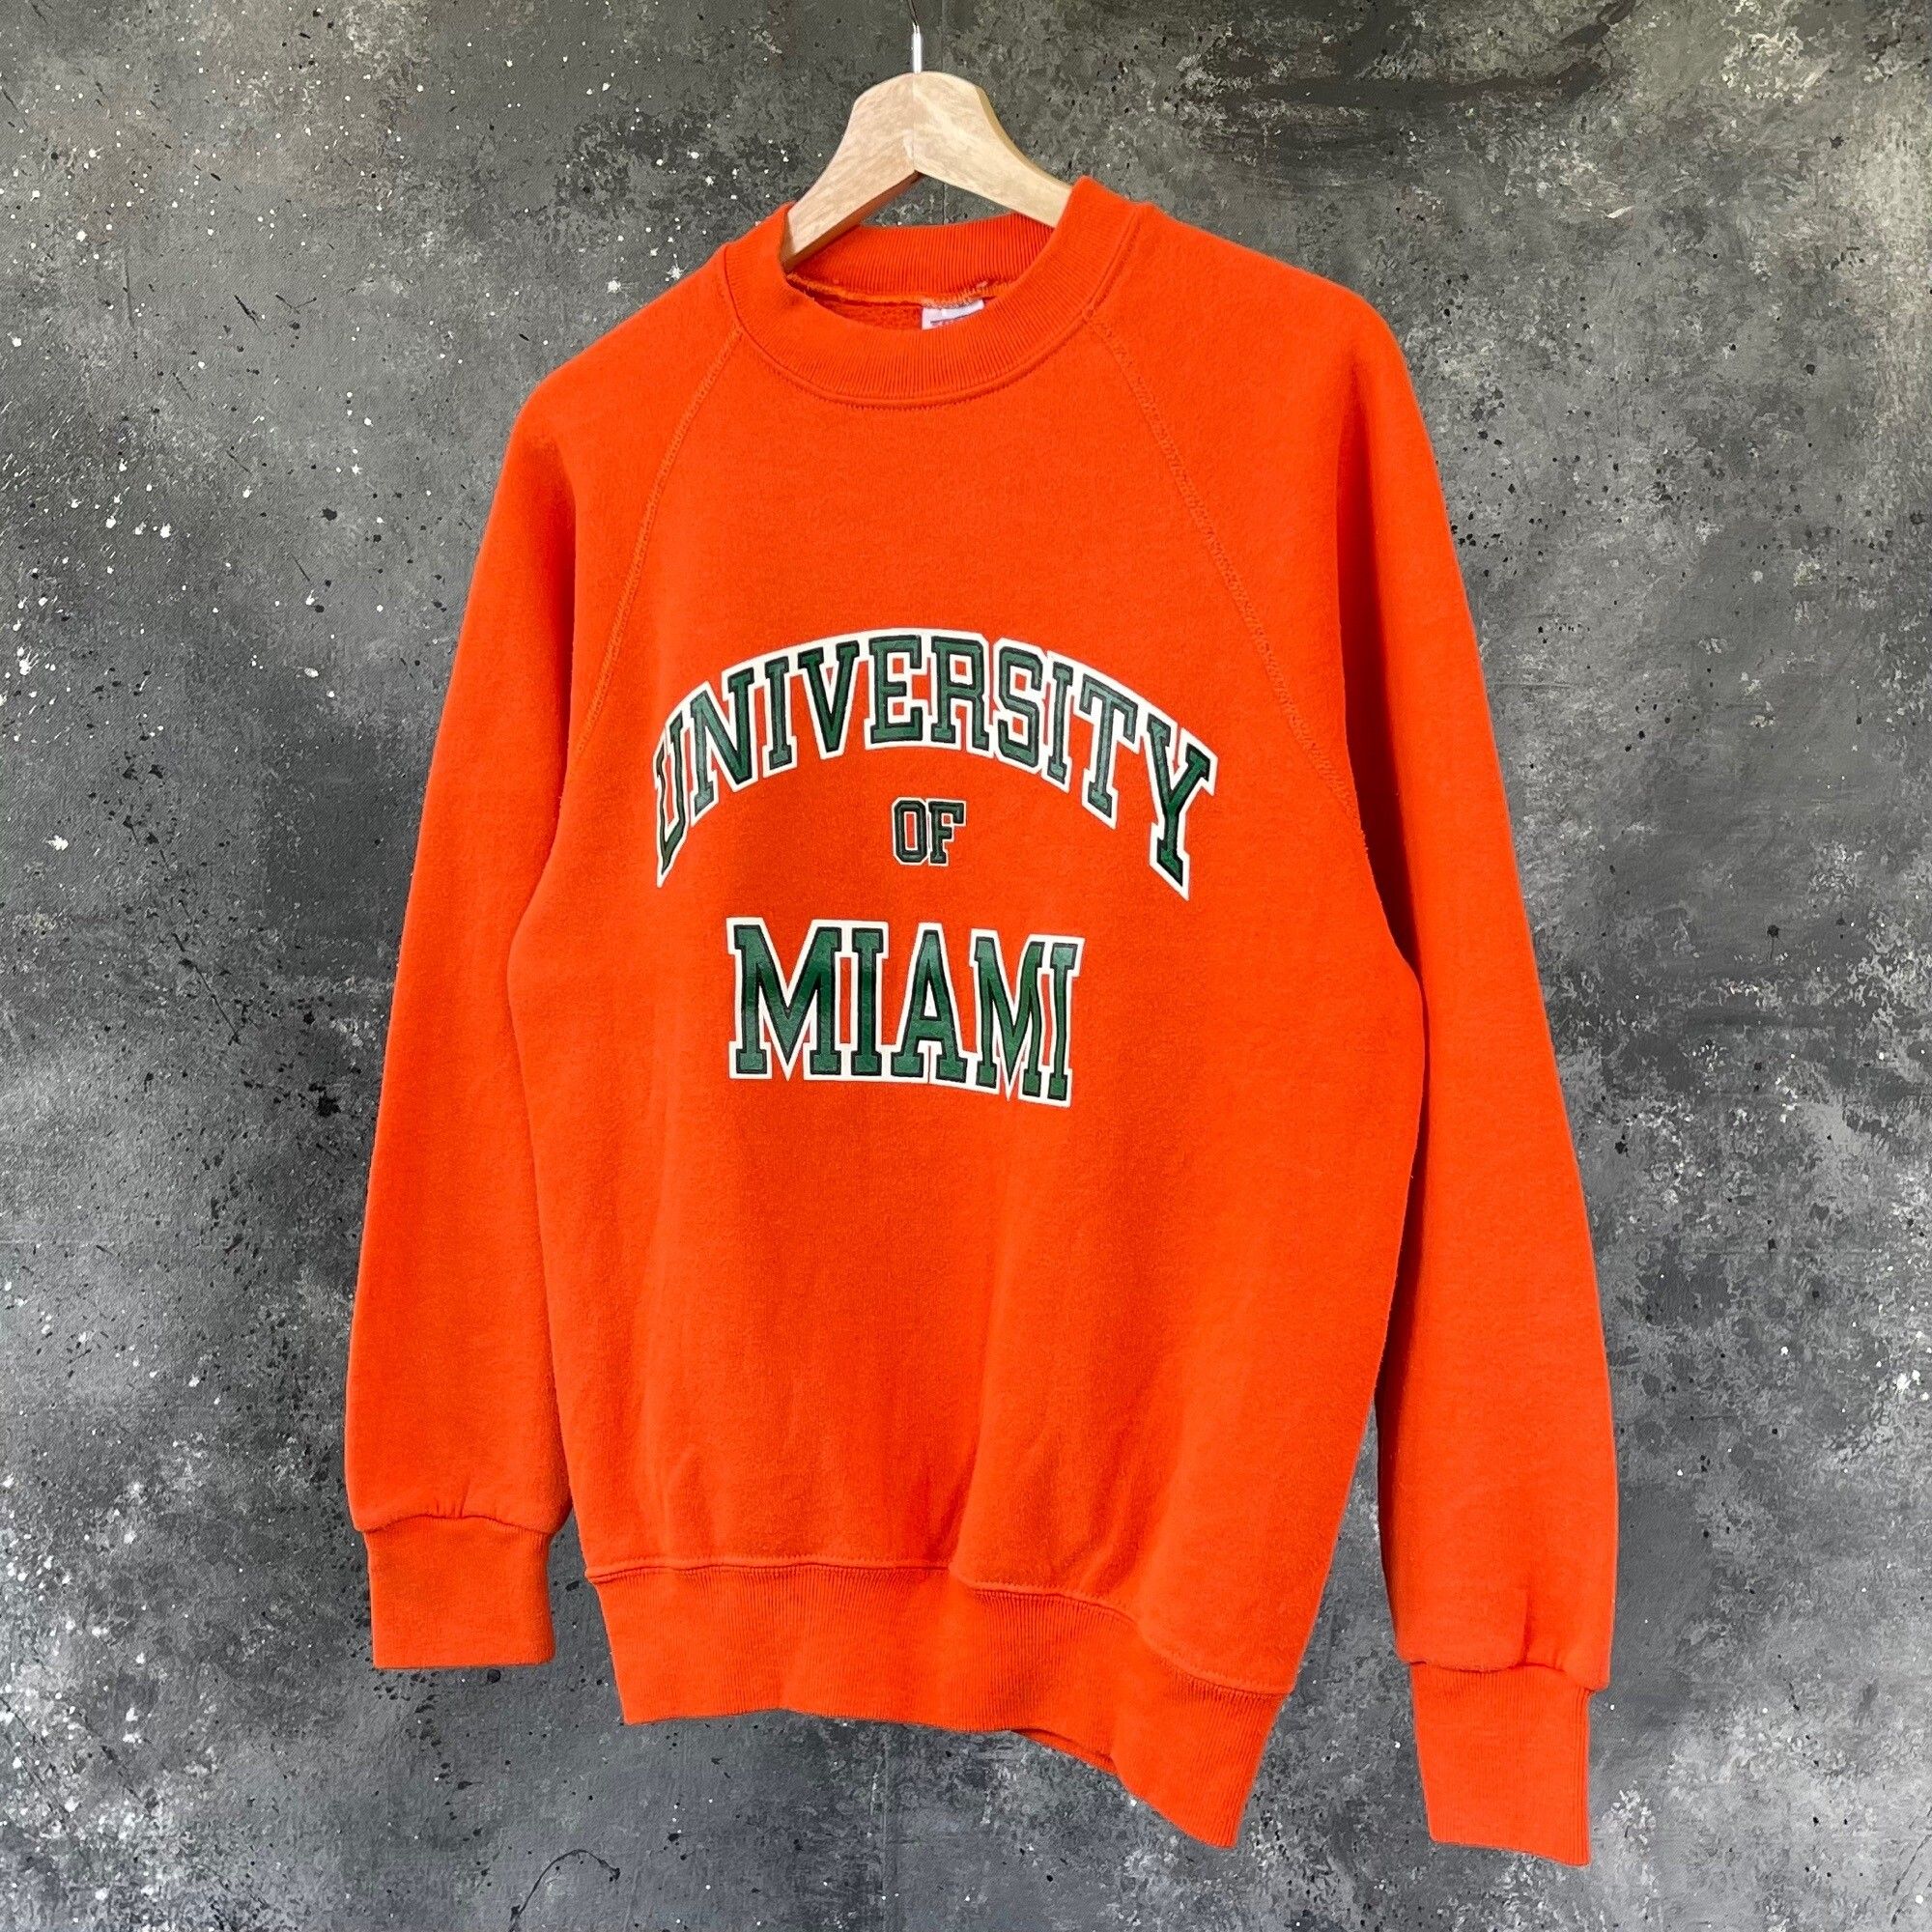 Vintage Vintage University Of Miami Crewneck Sweatshirt Size US S / EU 44-46 / 1 - 1 Preview